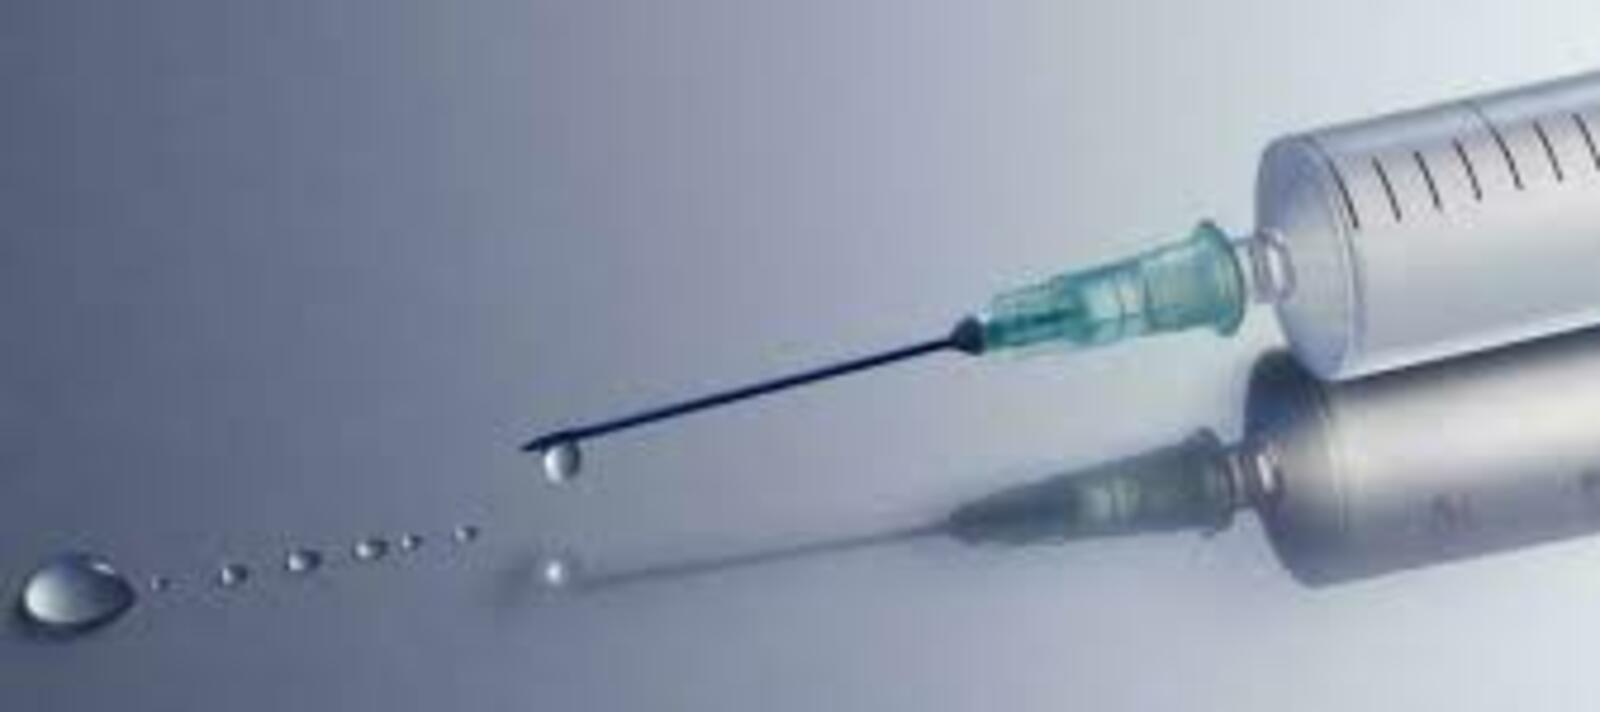 Башкириын вань улӥсьёслэн ӝыныез коронавируслы пумит вакцинация лэсьтӥз ни